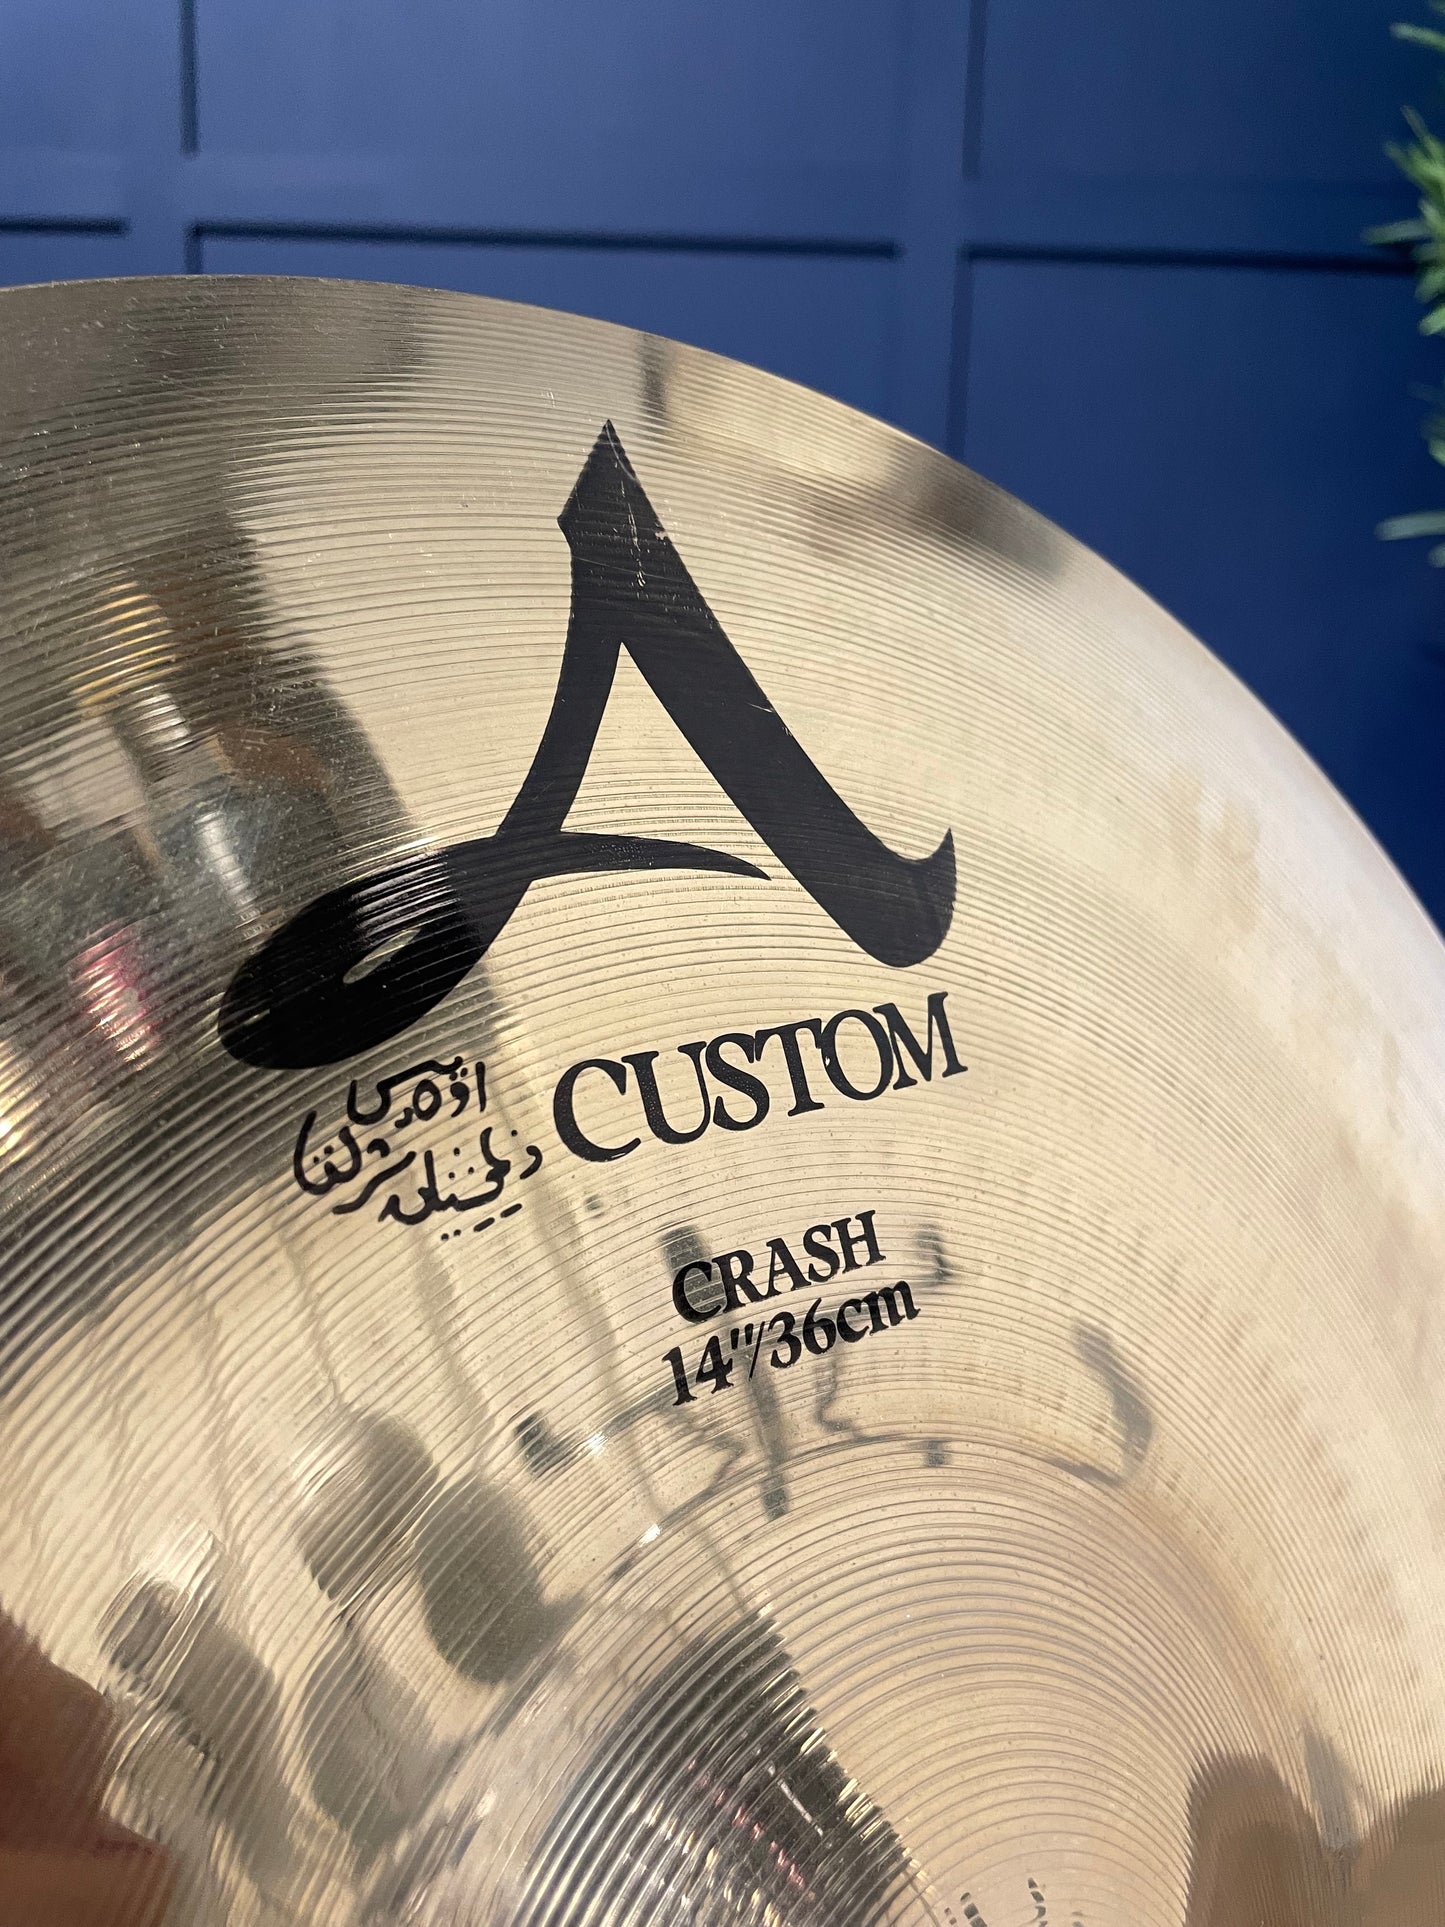 Zildjian A Custom 14"/35cm Crash Cymbal / Drum Accessory #LE20